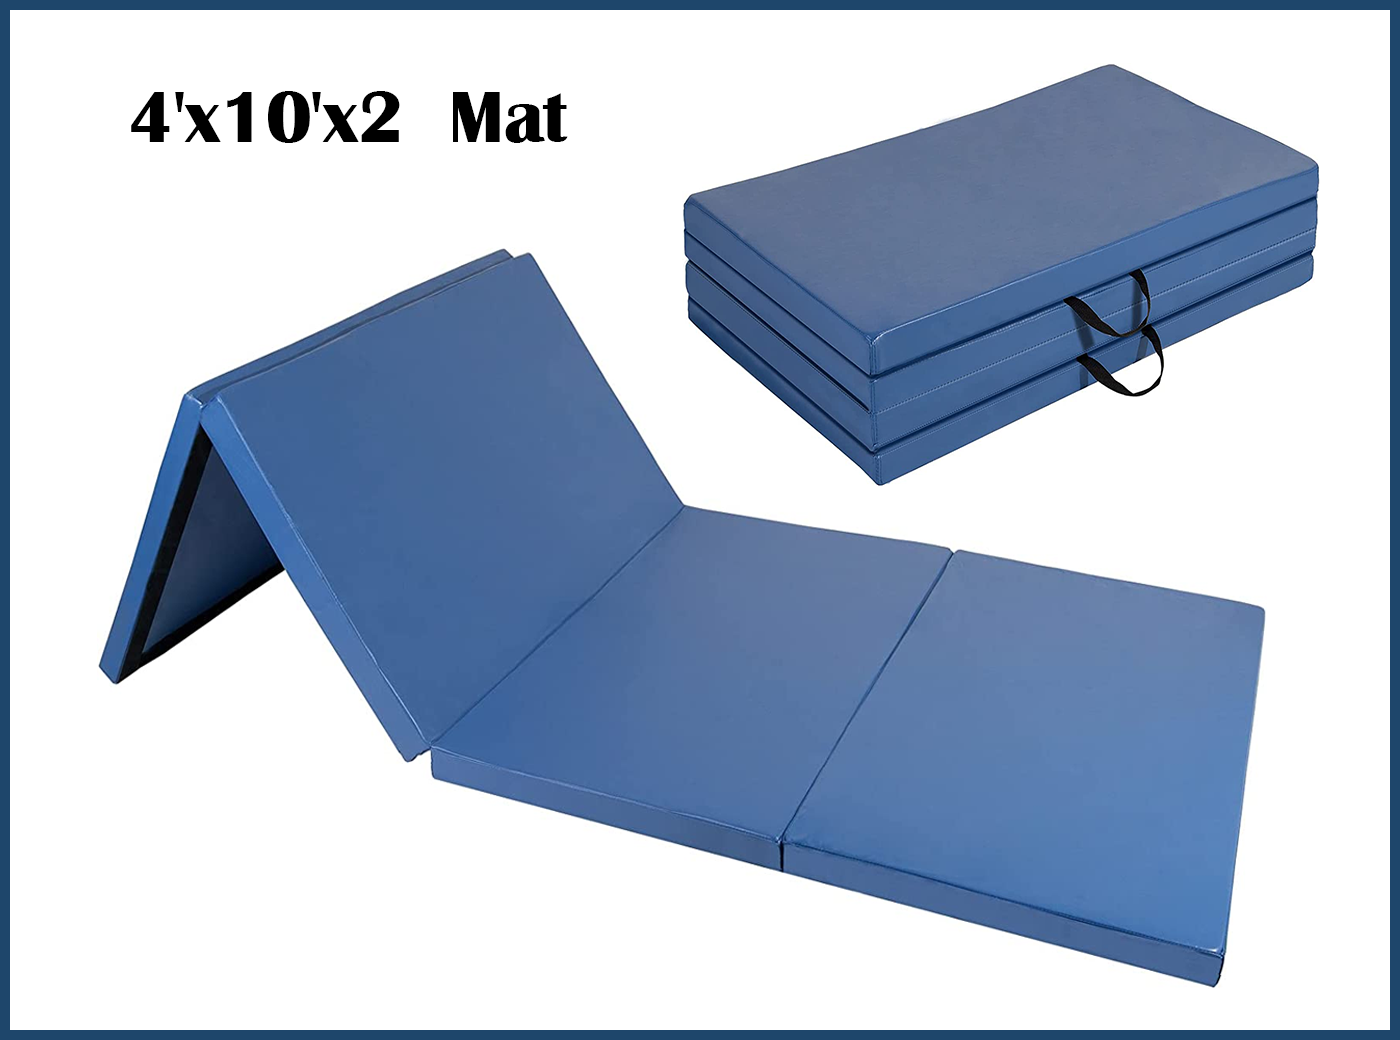 4'x10'x2 Thickened Folding Gym Mat, Cardio Stretch Yoga Mat